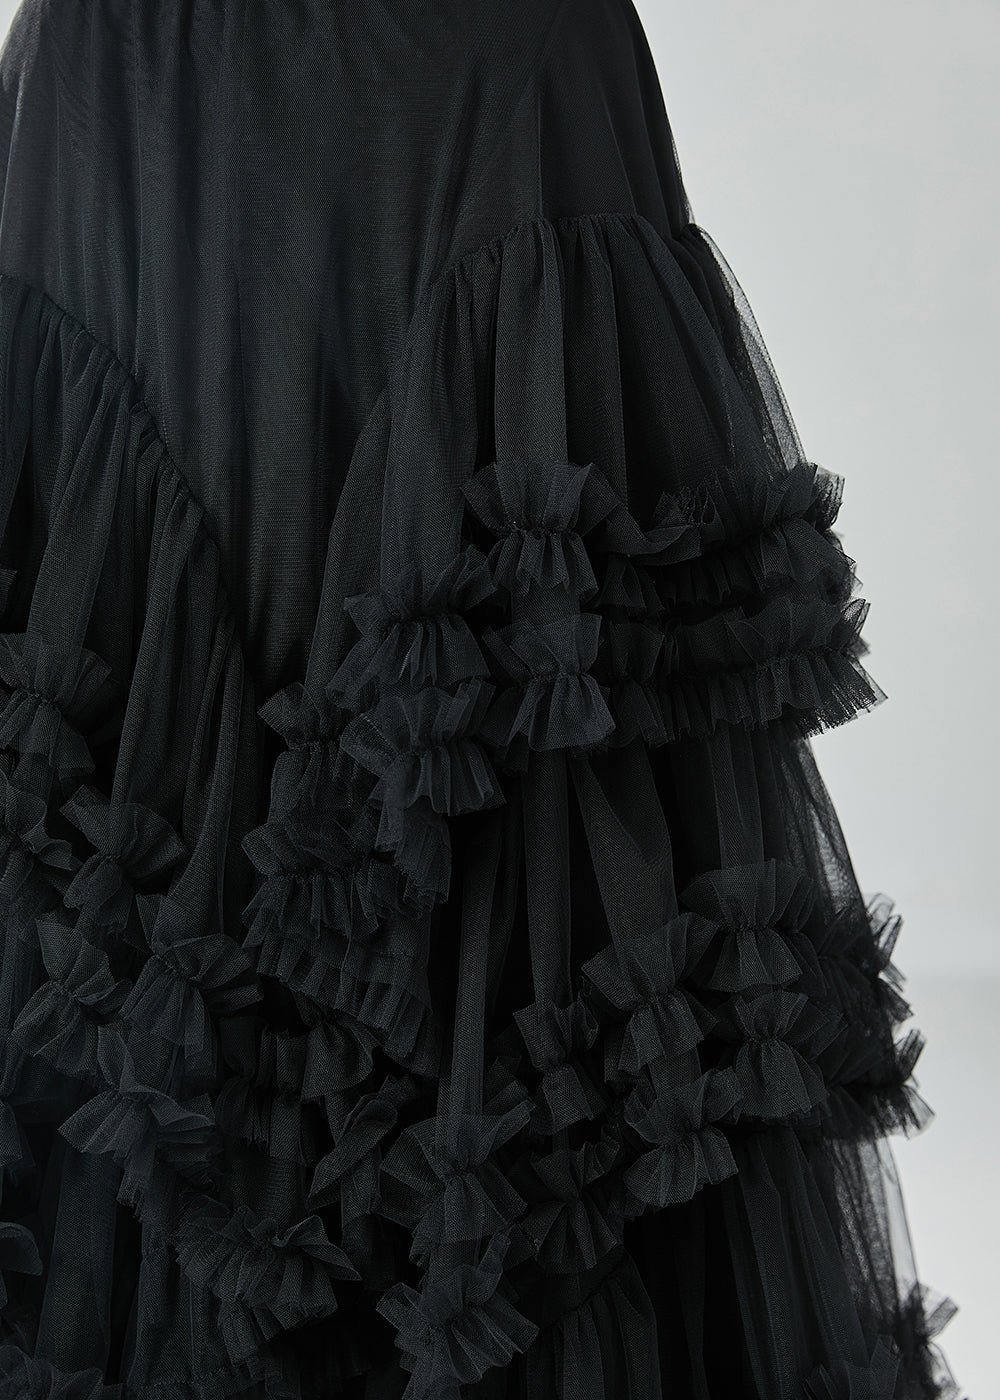 Art Black Asymmetrical Patchwork Ruffled Tulle Beach Skirts Summer LY6056 - fabuloryshop